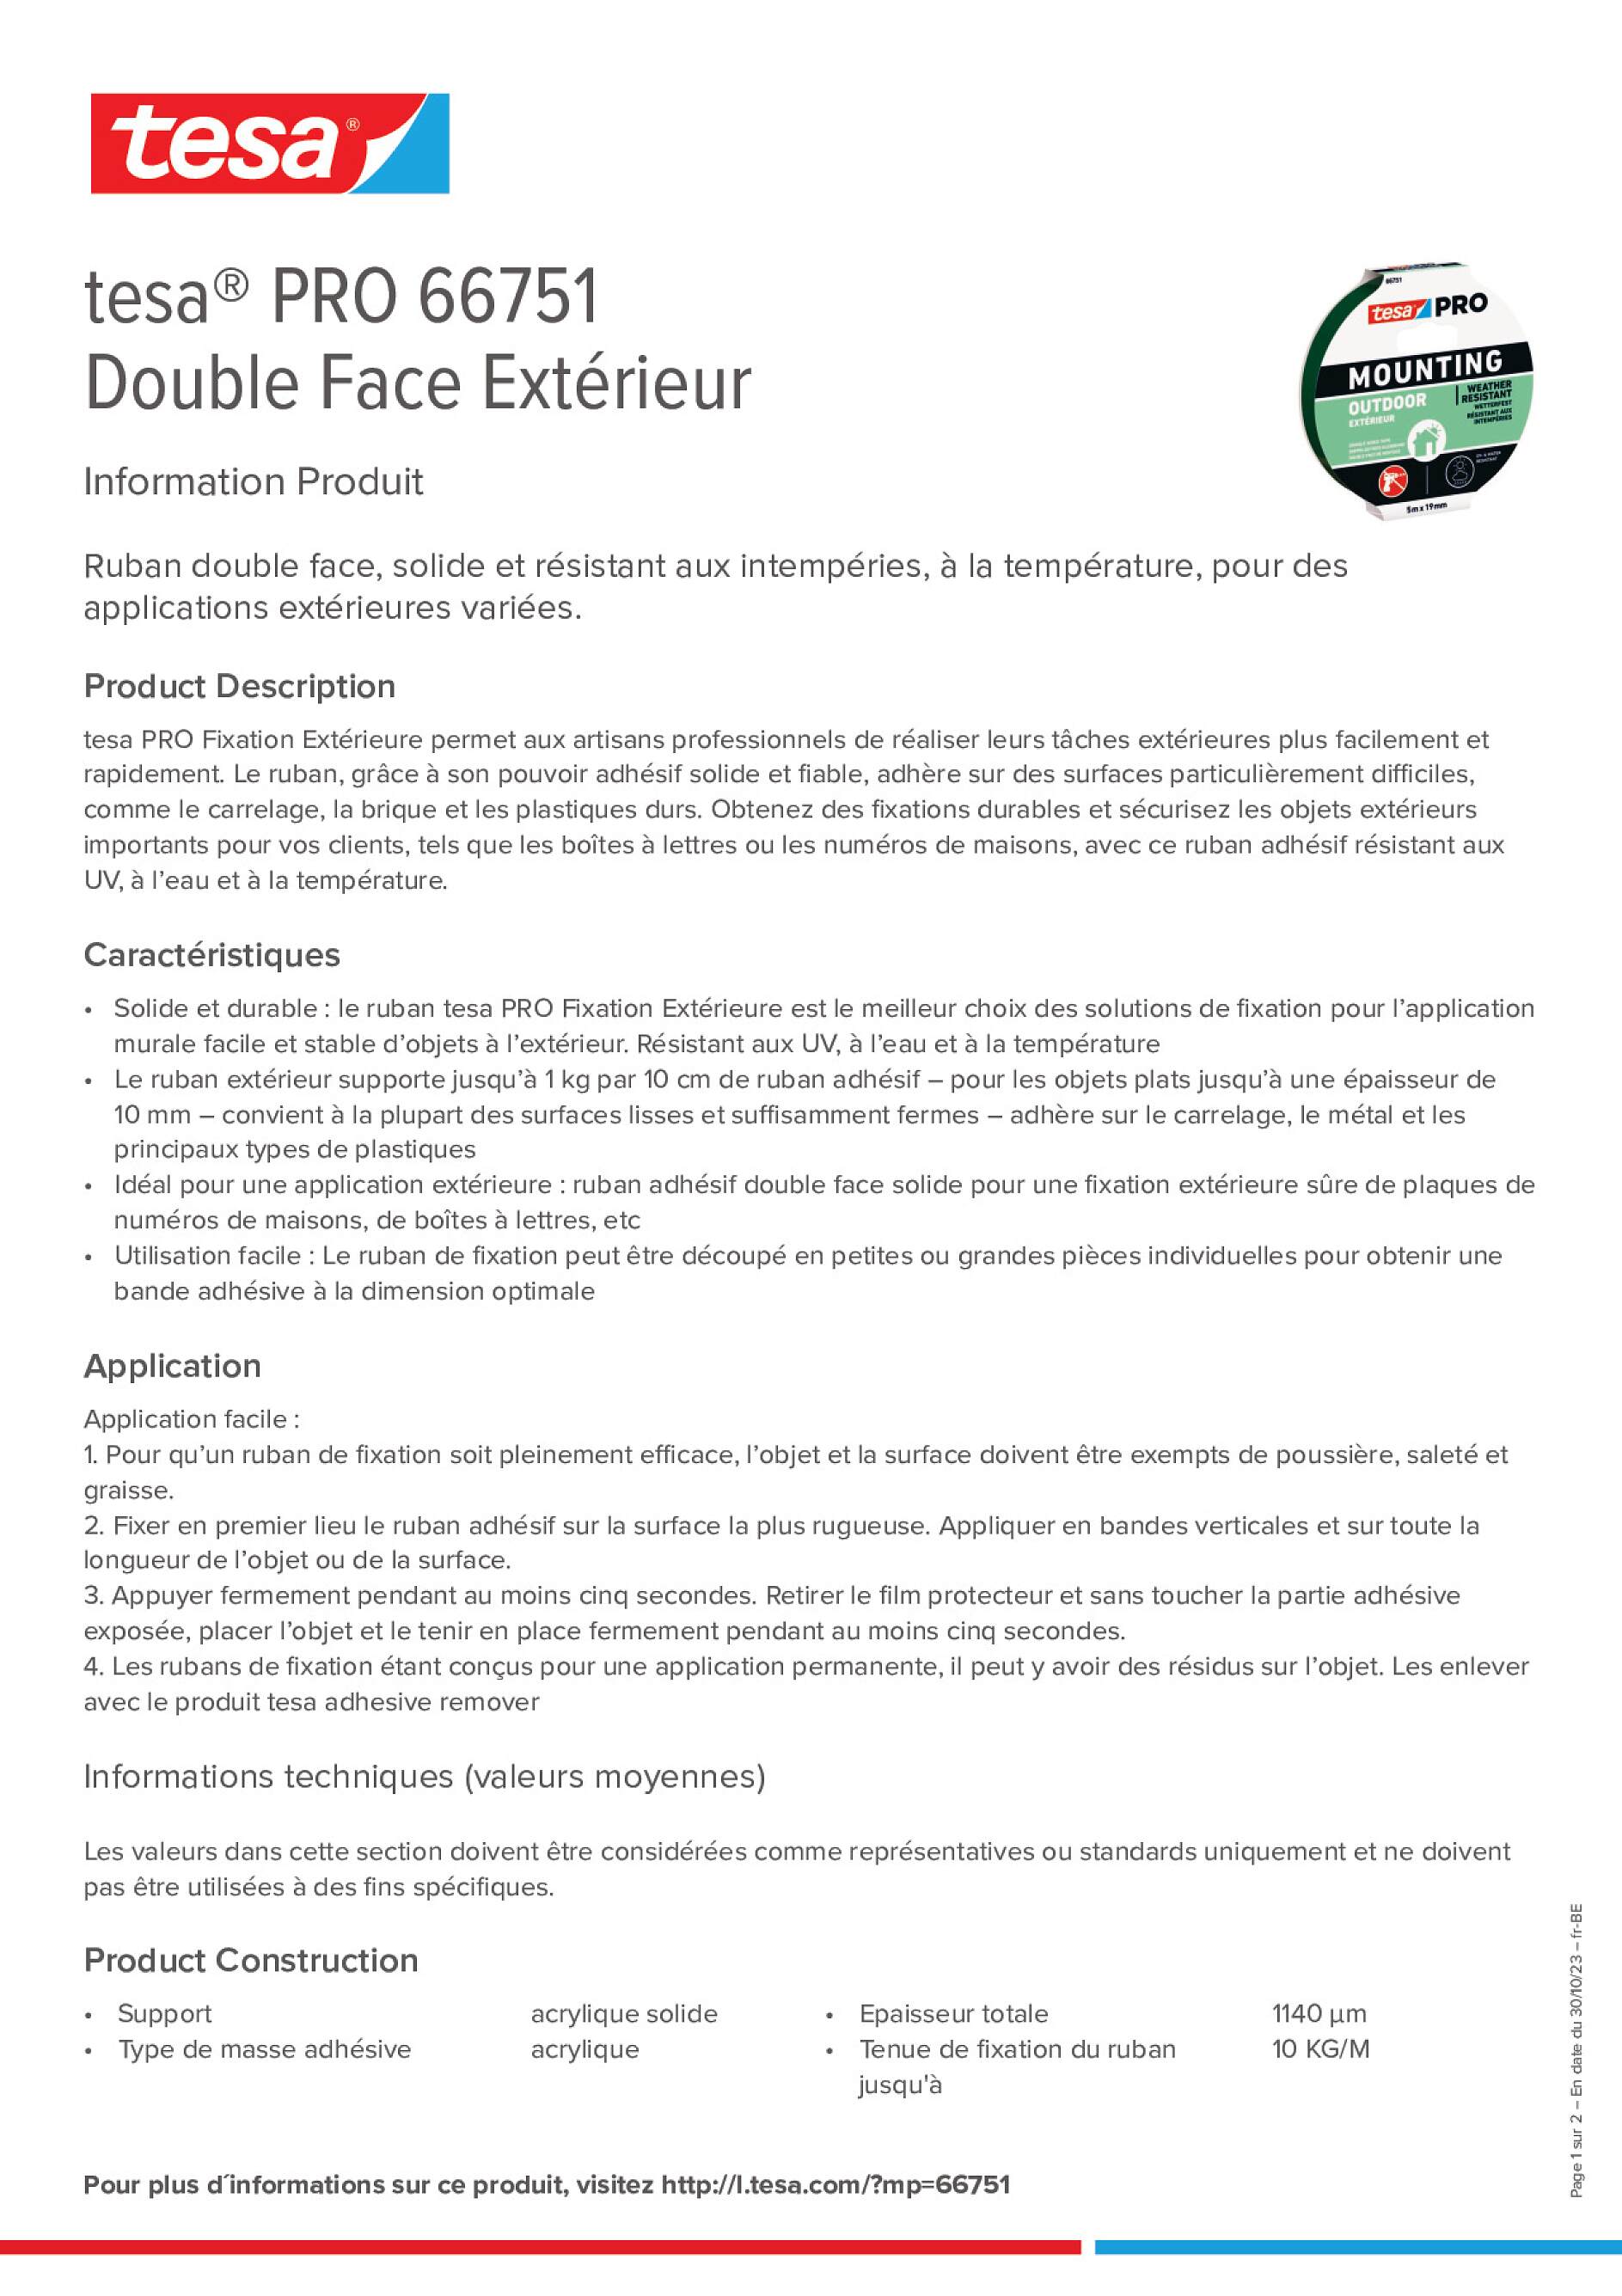 tesa® PRO 66751 Double Face Extérieur - tesa